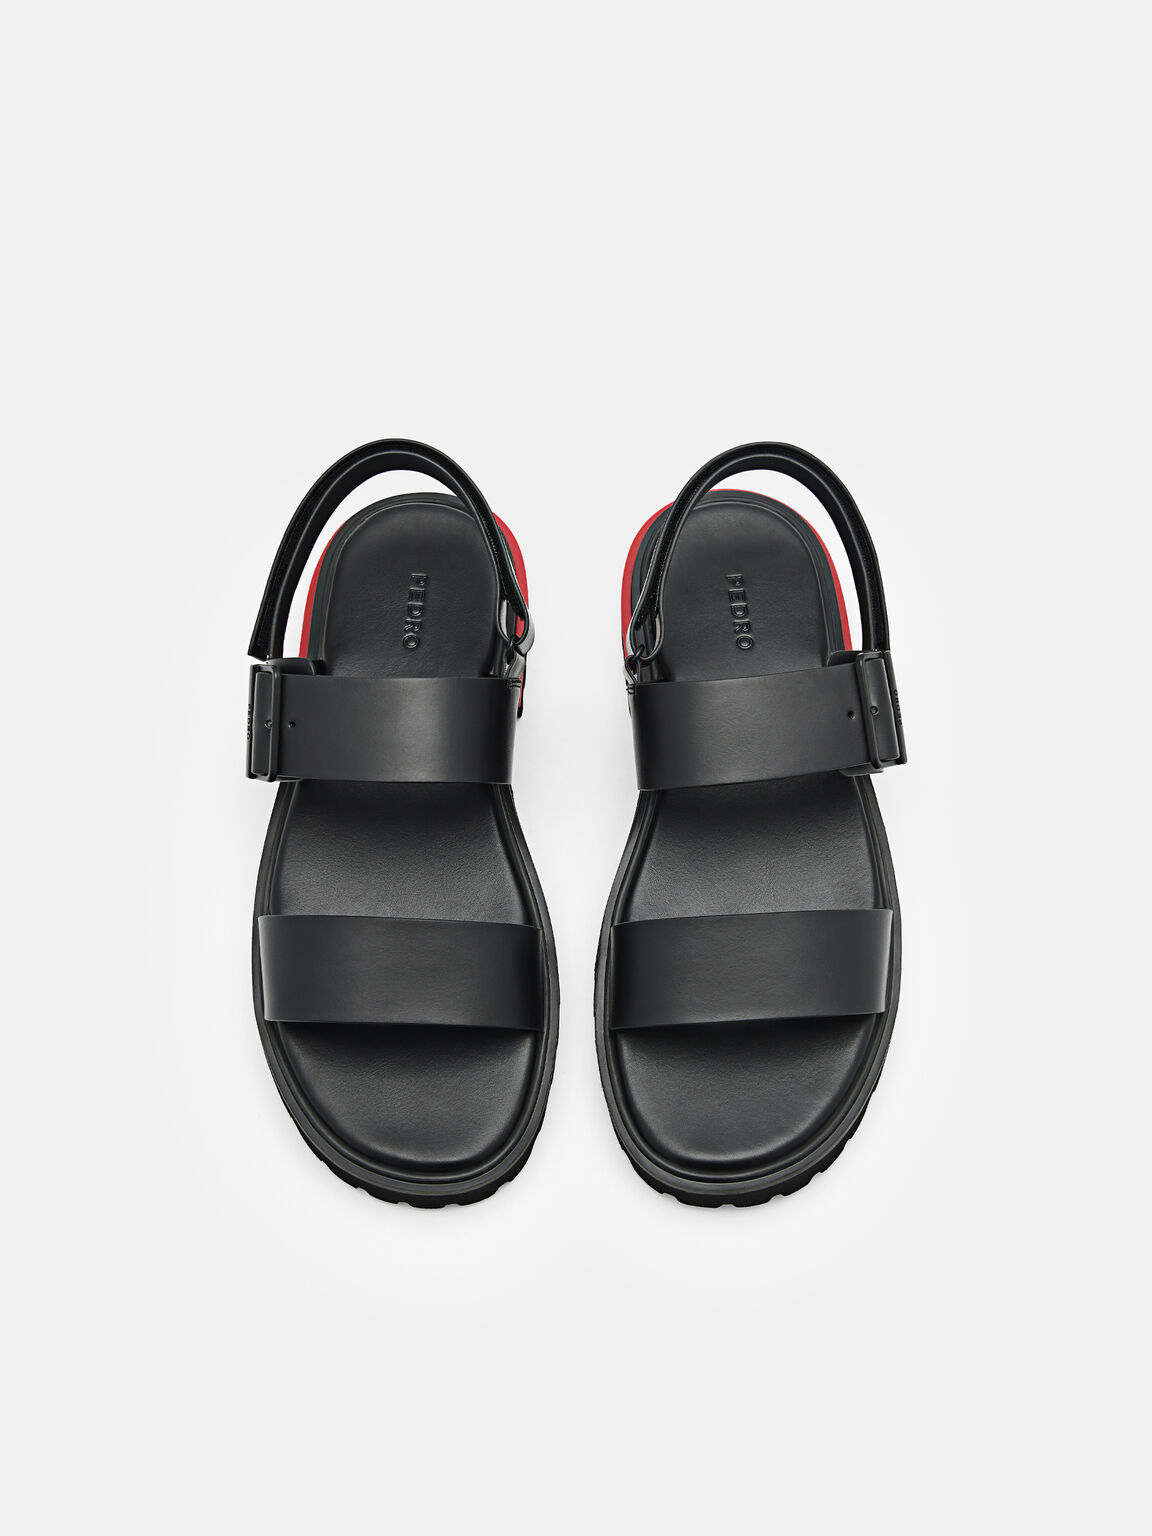 Cooper Backstrap Sandals, Black